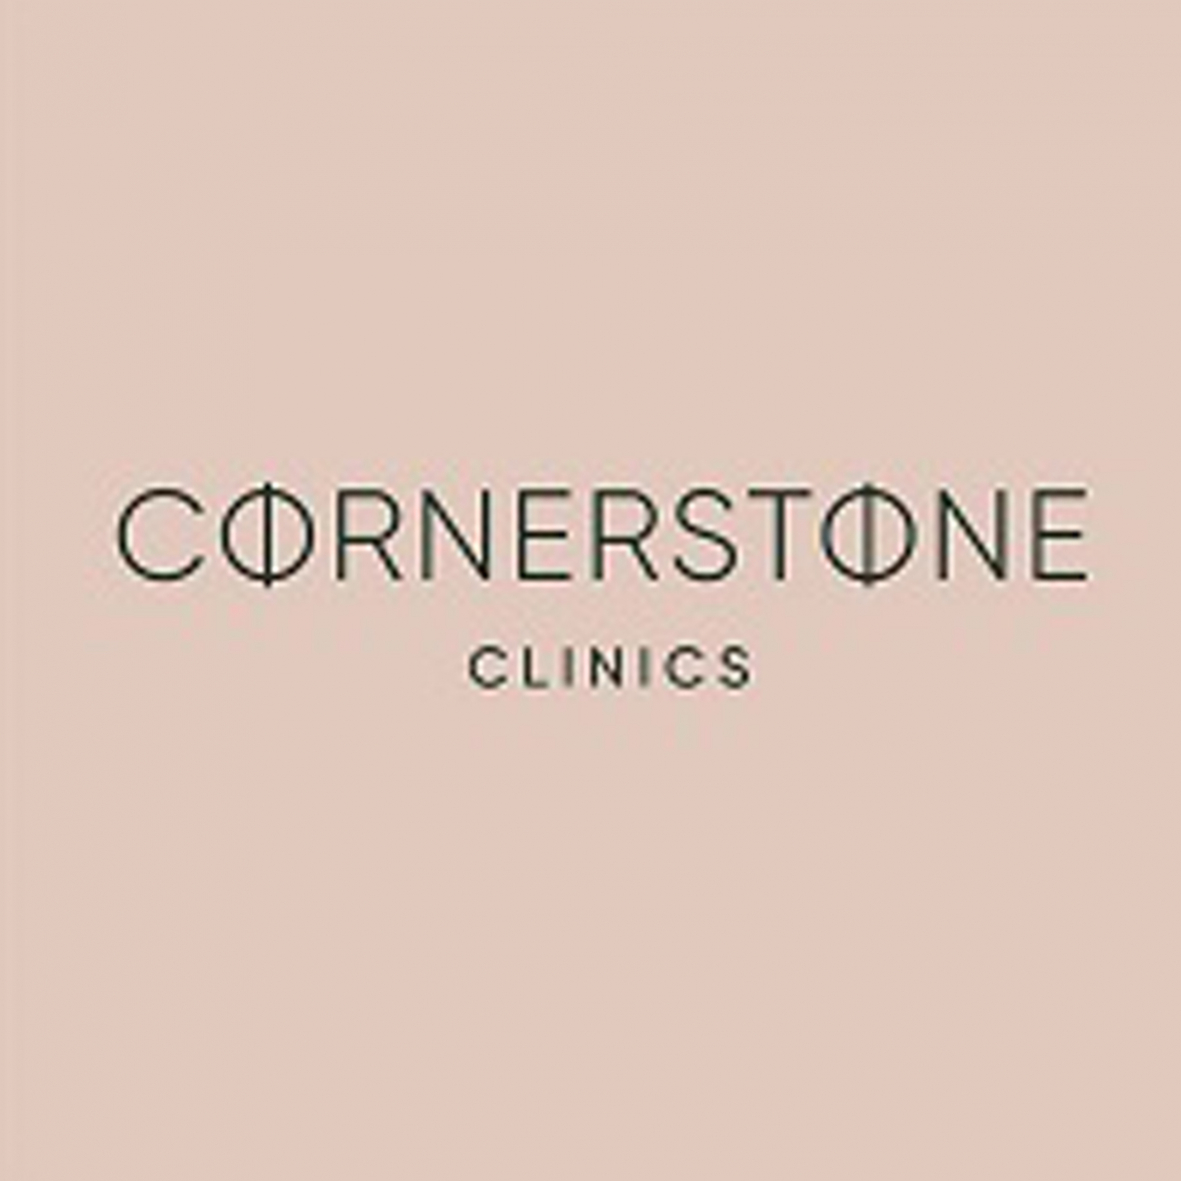 CornerstoneClinic